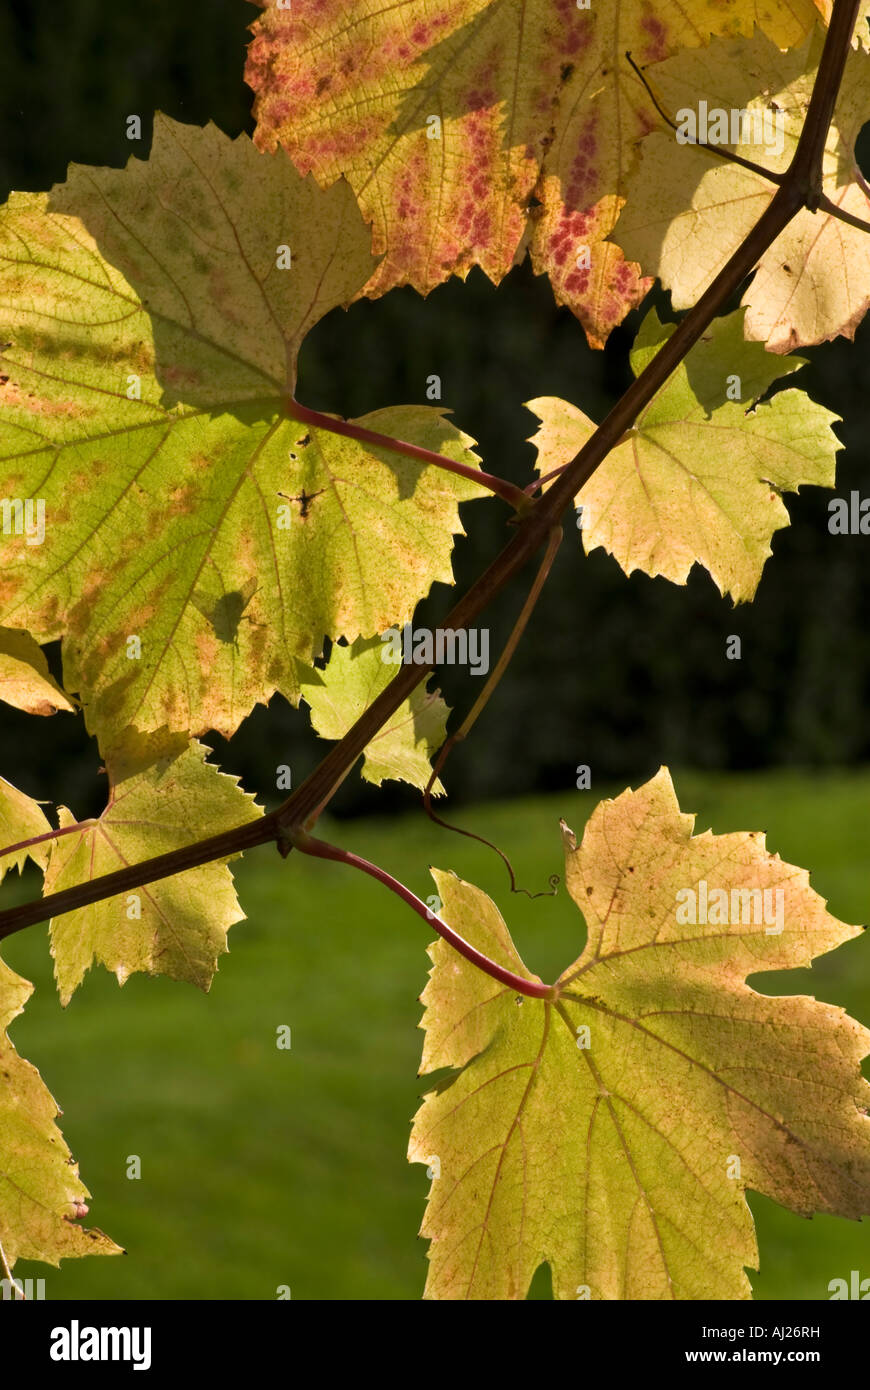 Fly silhouette through a grape leaf autumn Stock Photo